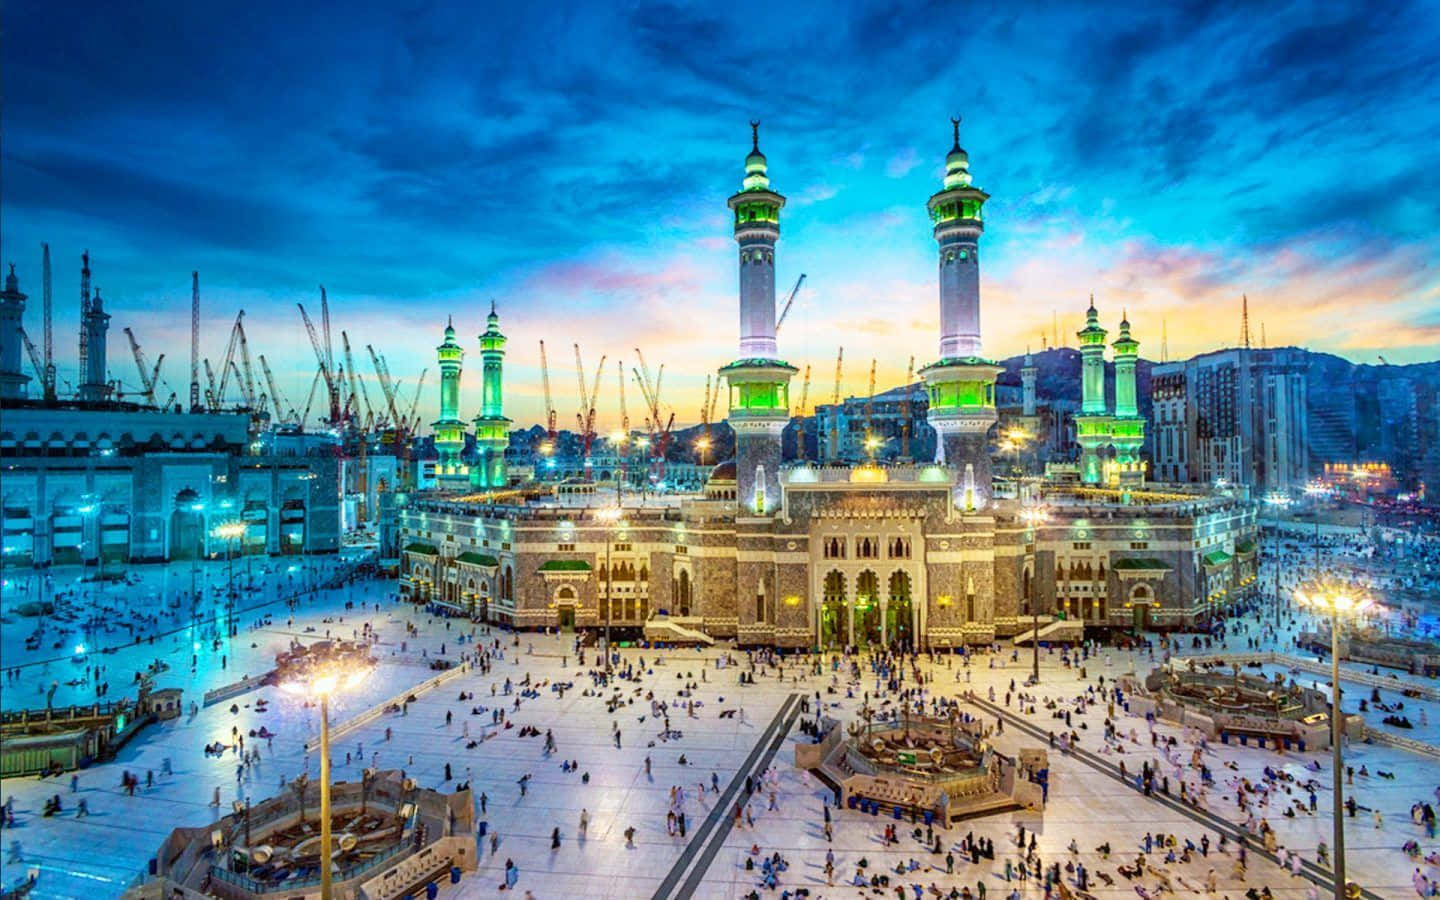 Helligislamsk Sted Mekka, Saudi-arabien, I Al Sin Herlighed